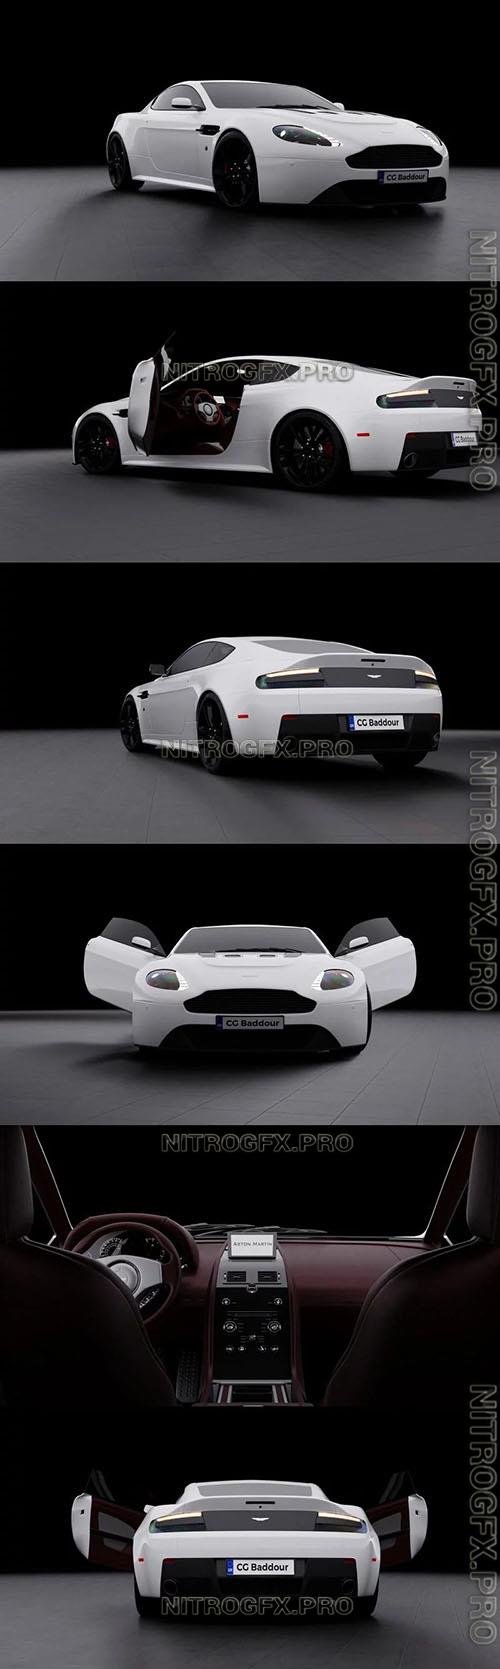 Aston Martin V12 Vantage S 2016 - 3D car model